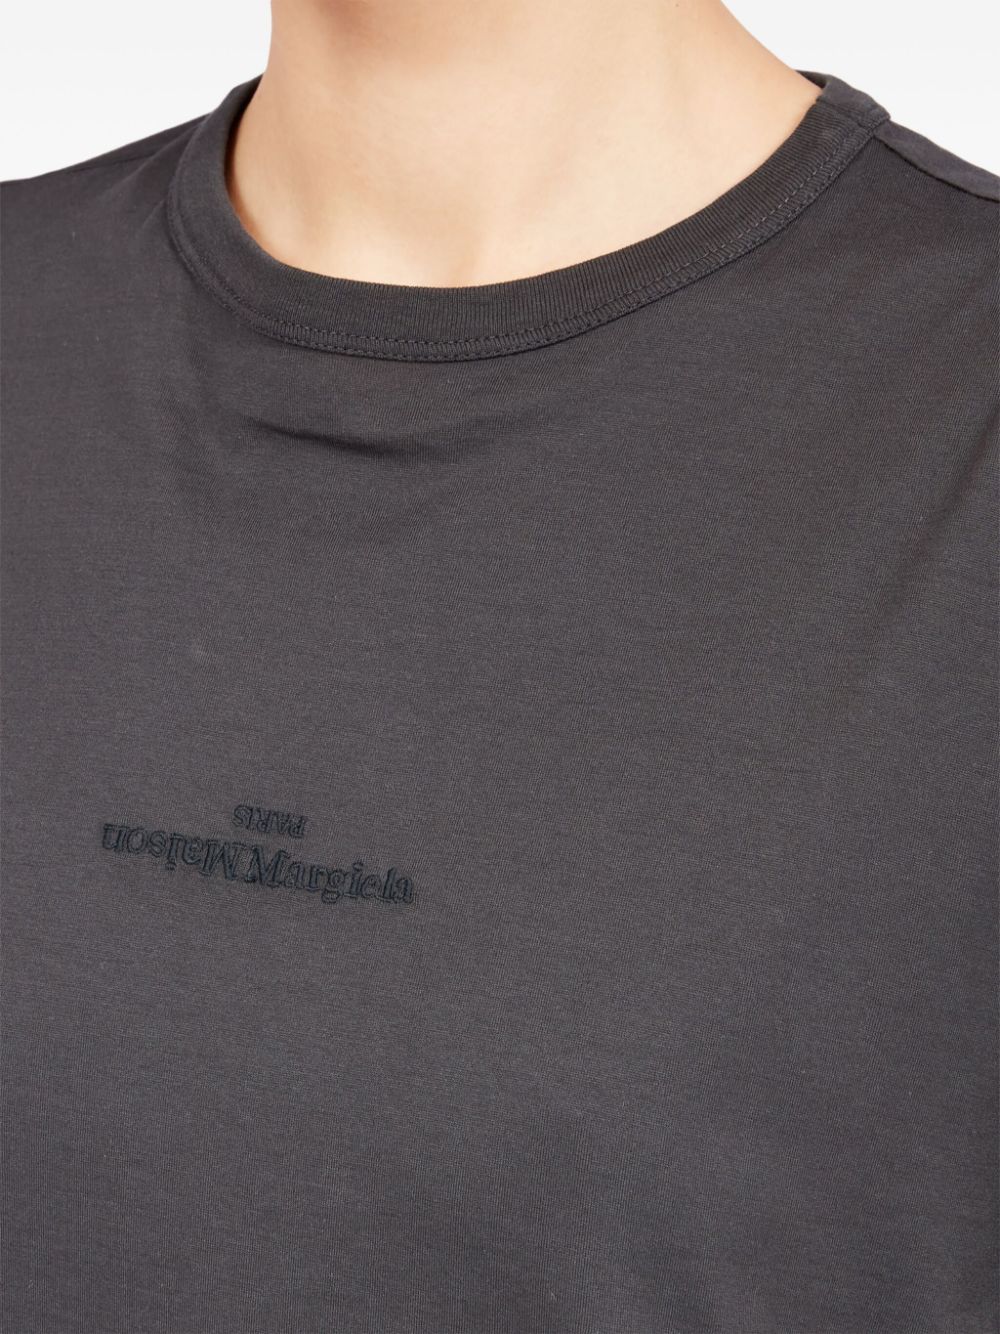 Gray logotype t-shirt